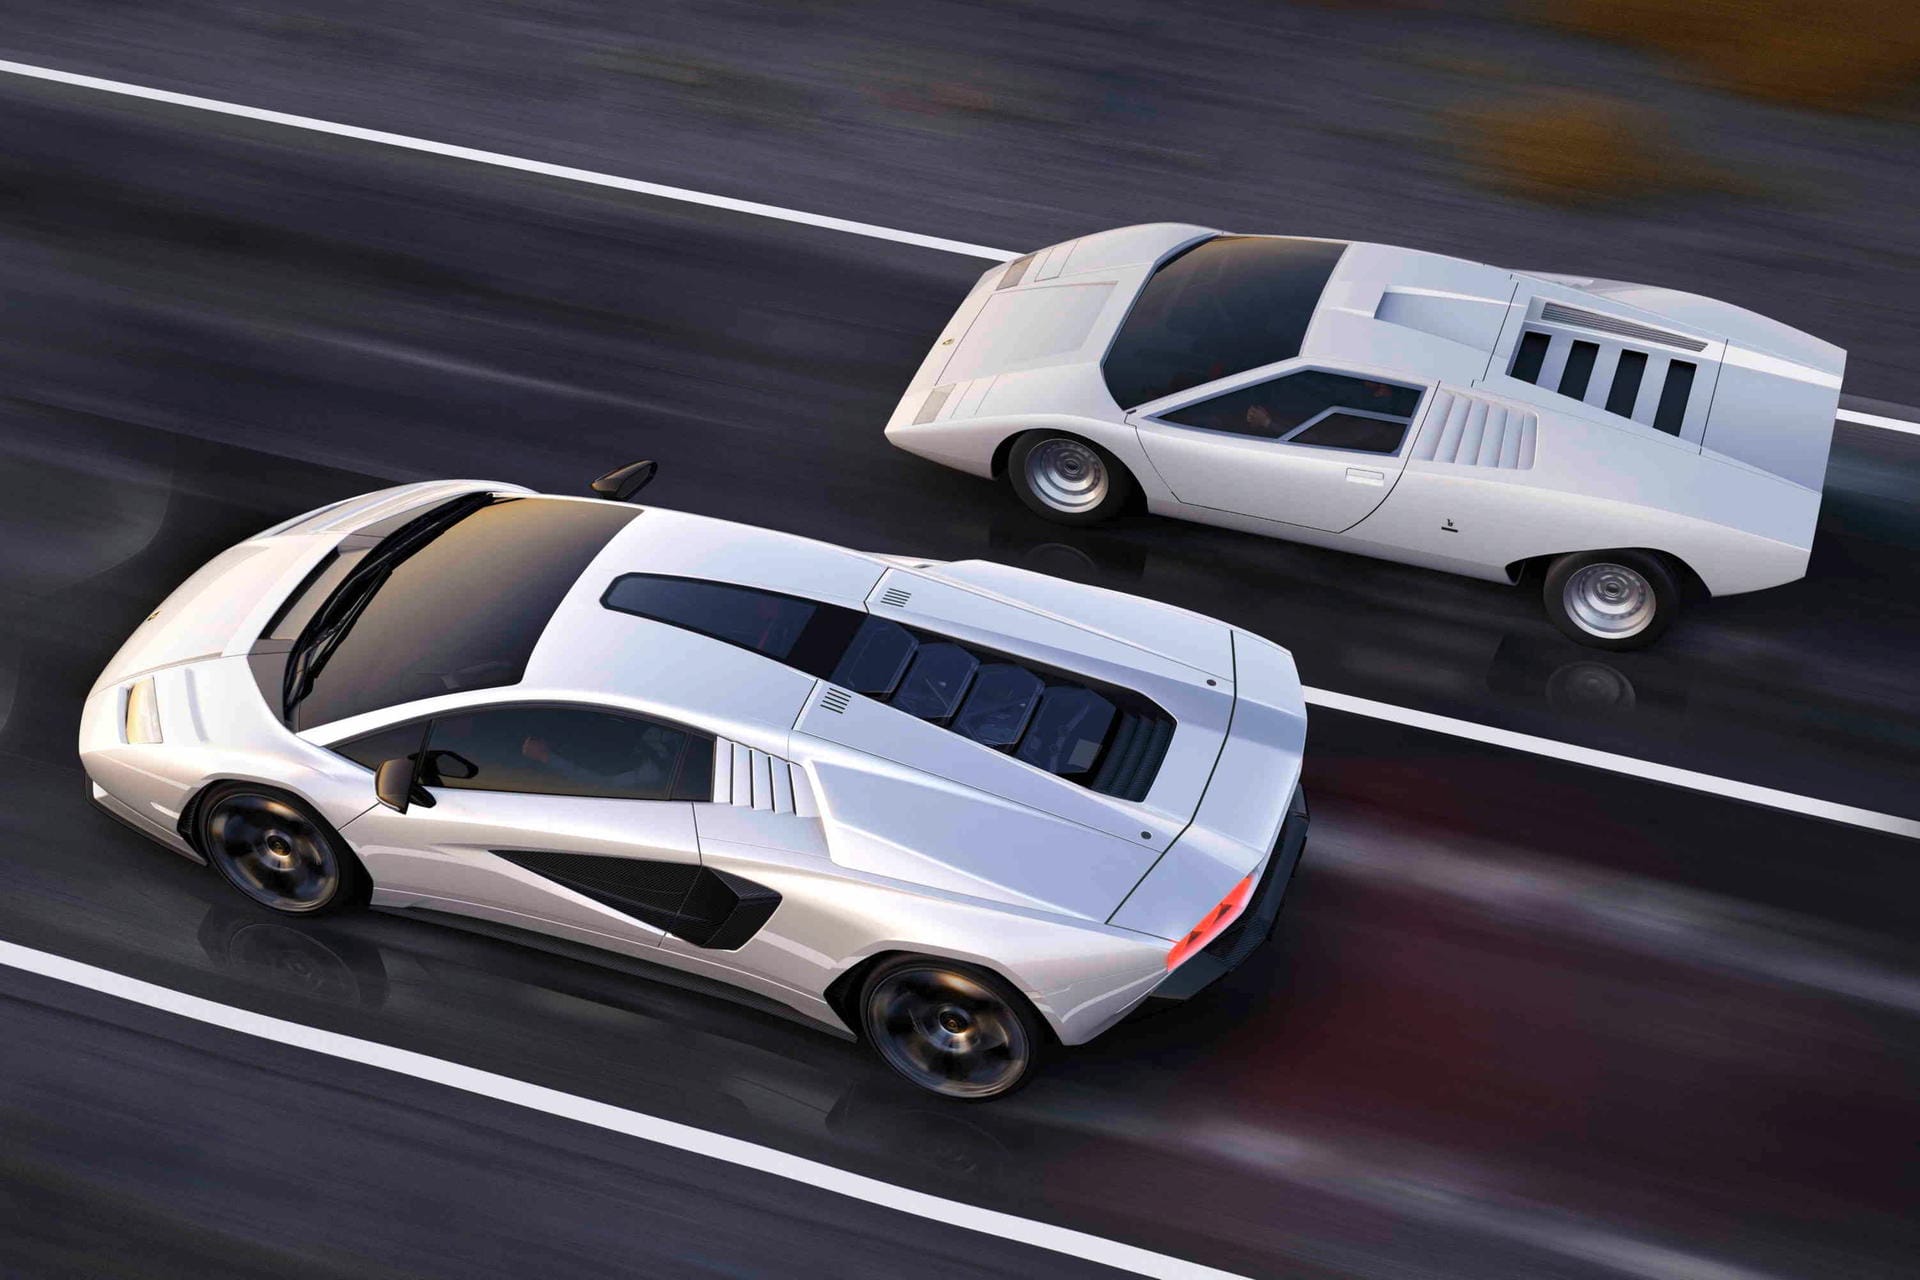 Alt und neu: Lamborghini modernisiert seinen wohl berühmtesten Sportwagen, den Countach.